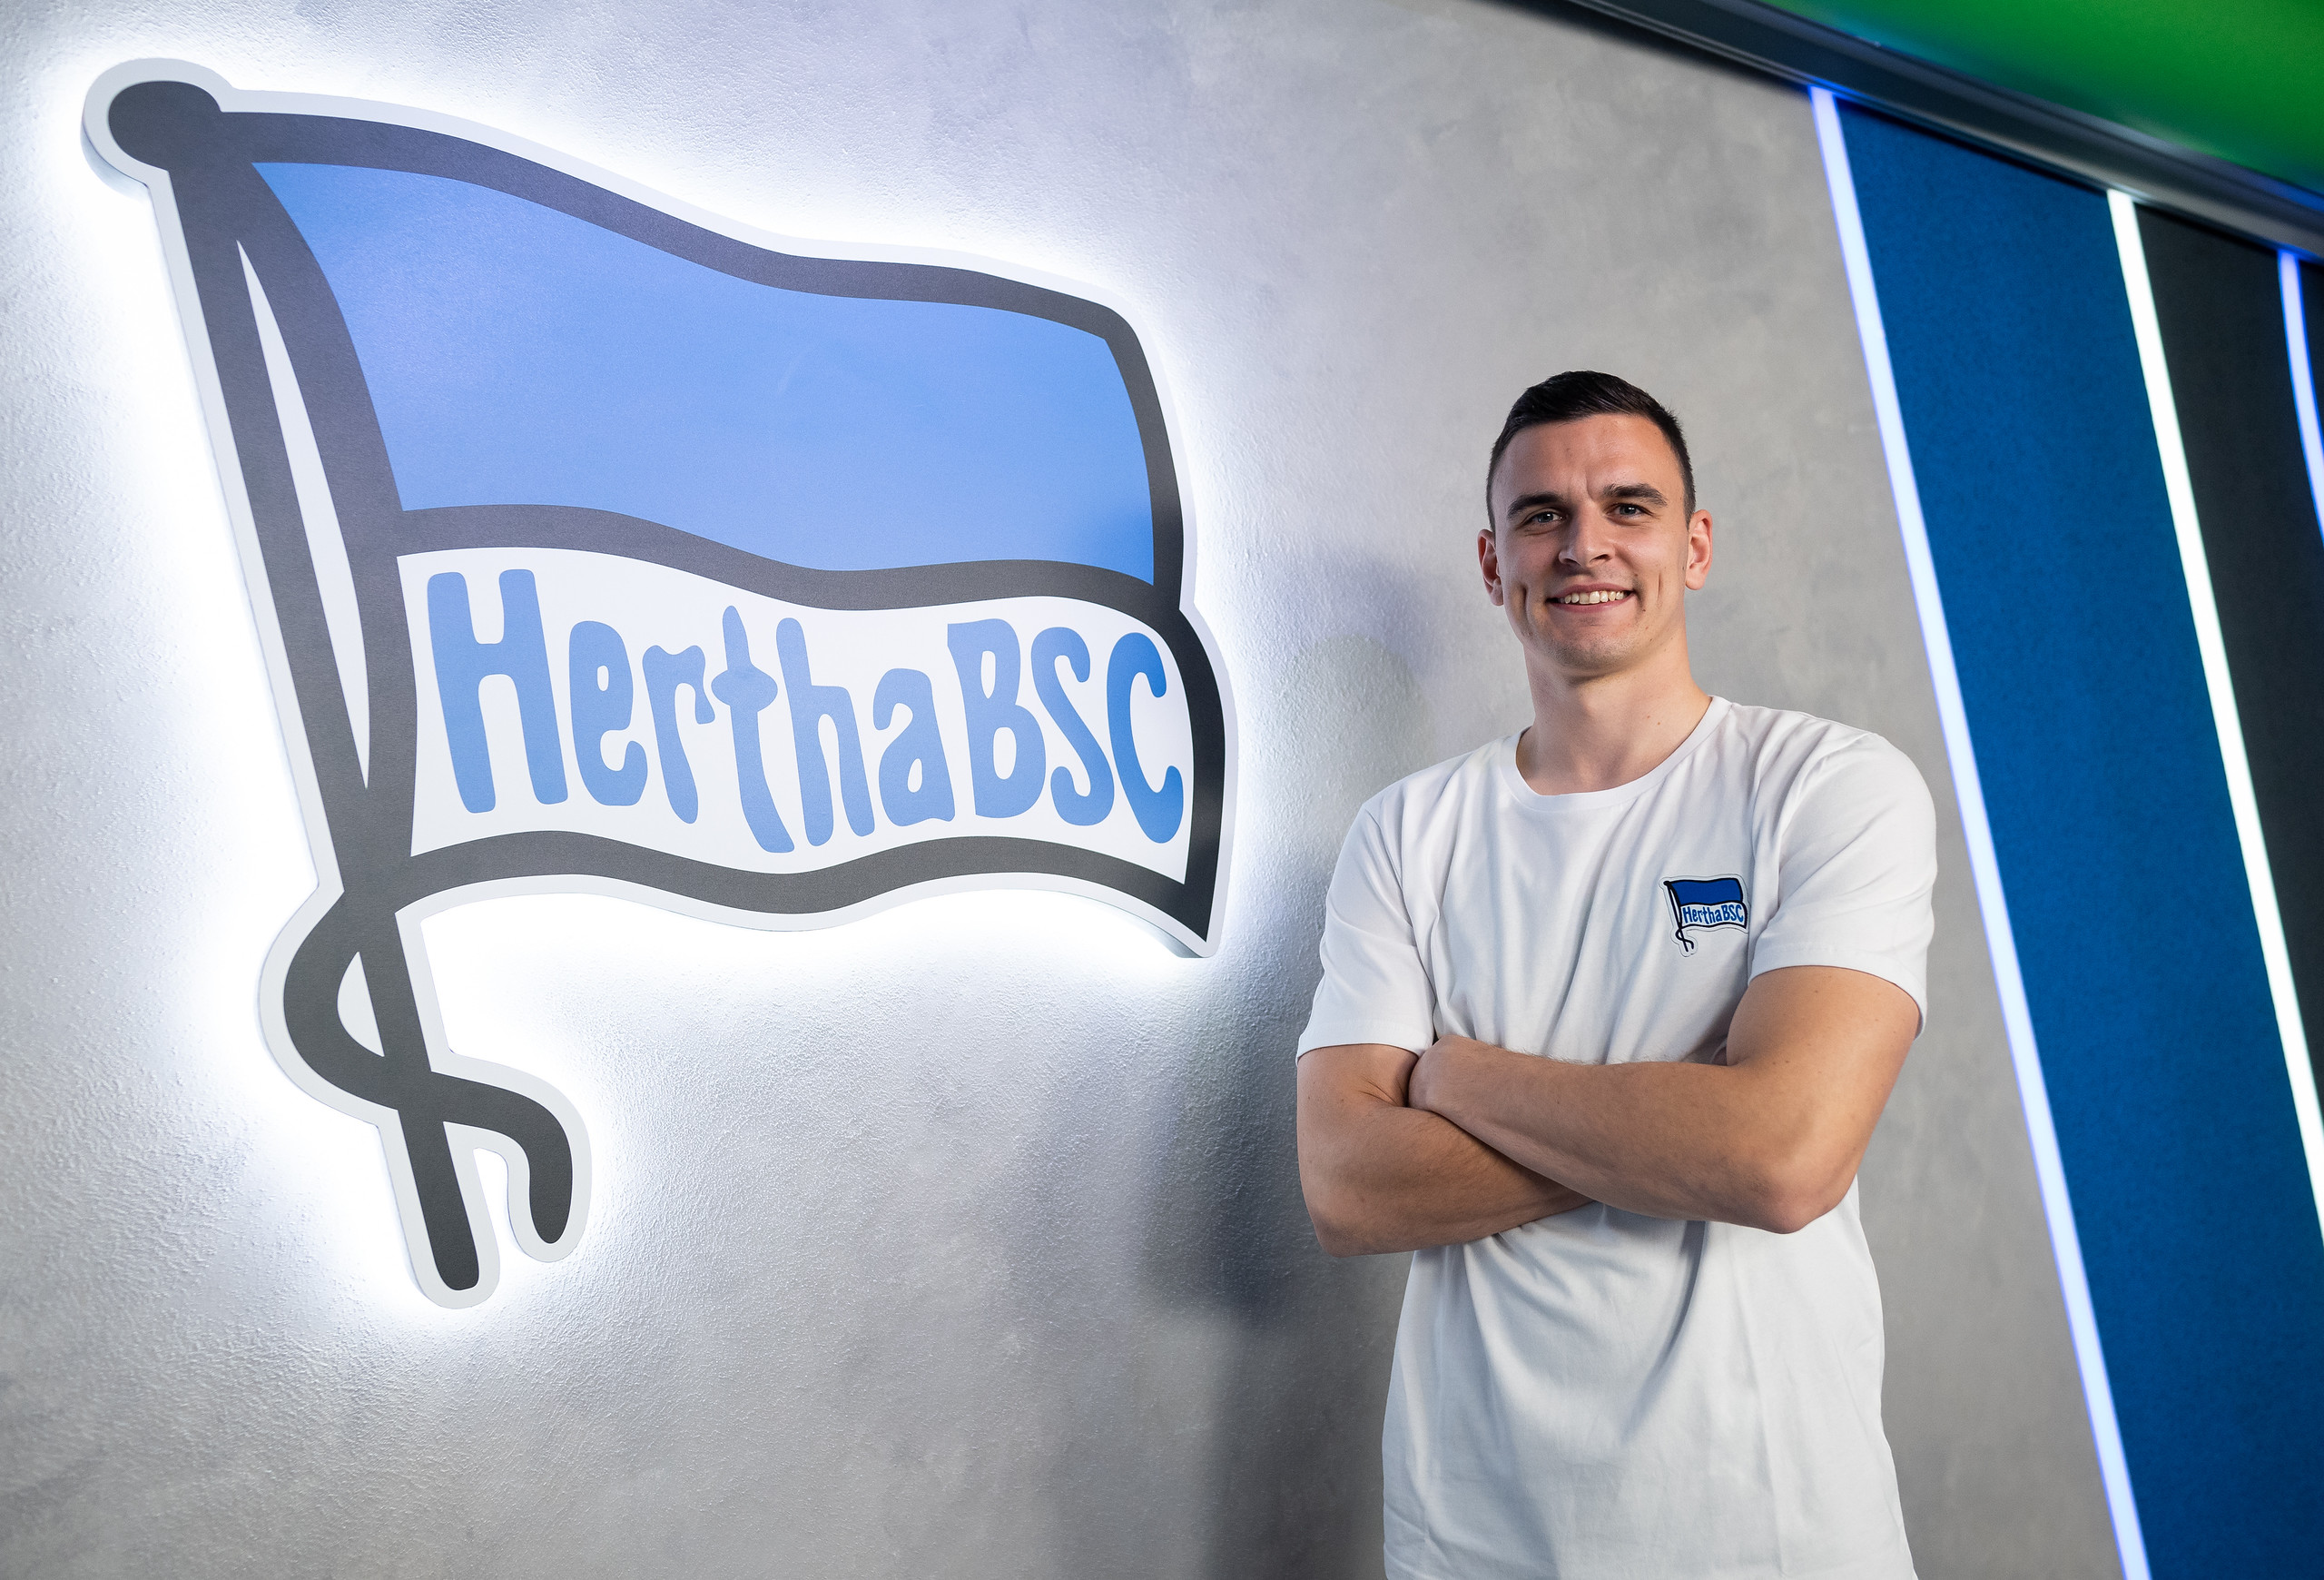 Filip Uremović posa sonriente frente a la bandera del Hertha.